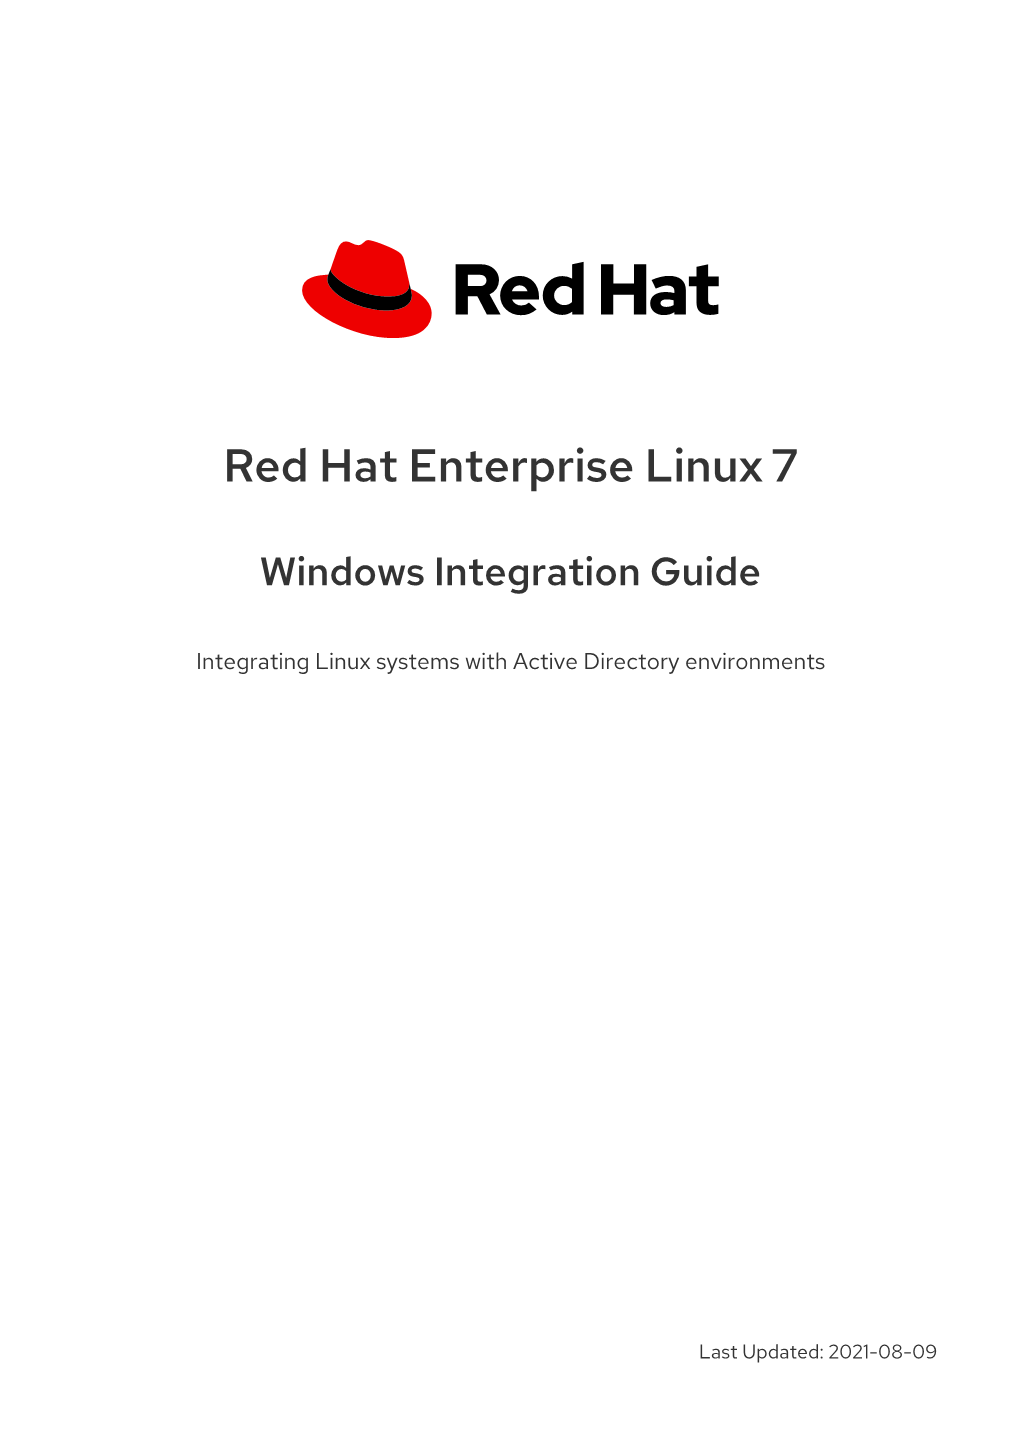 Red Hat Enterprise Linux Windows Integration Guide